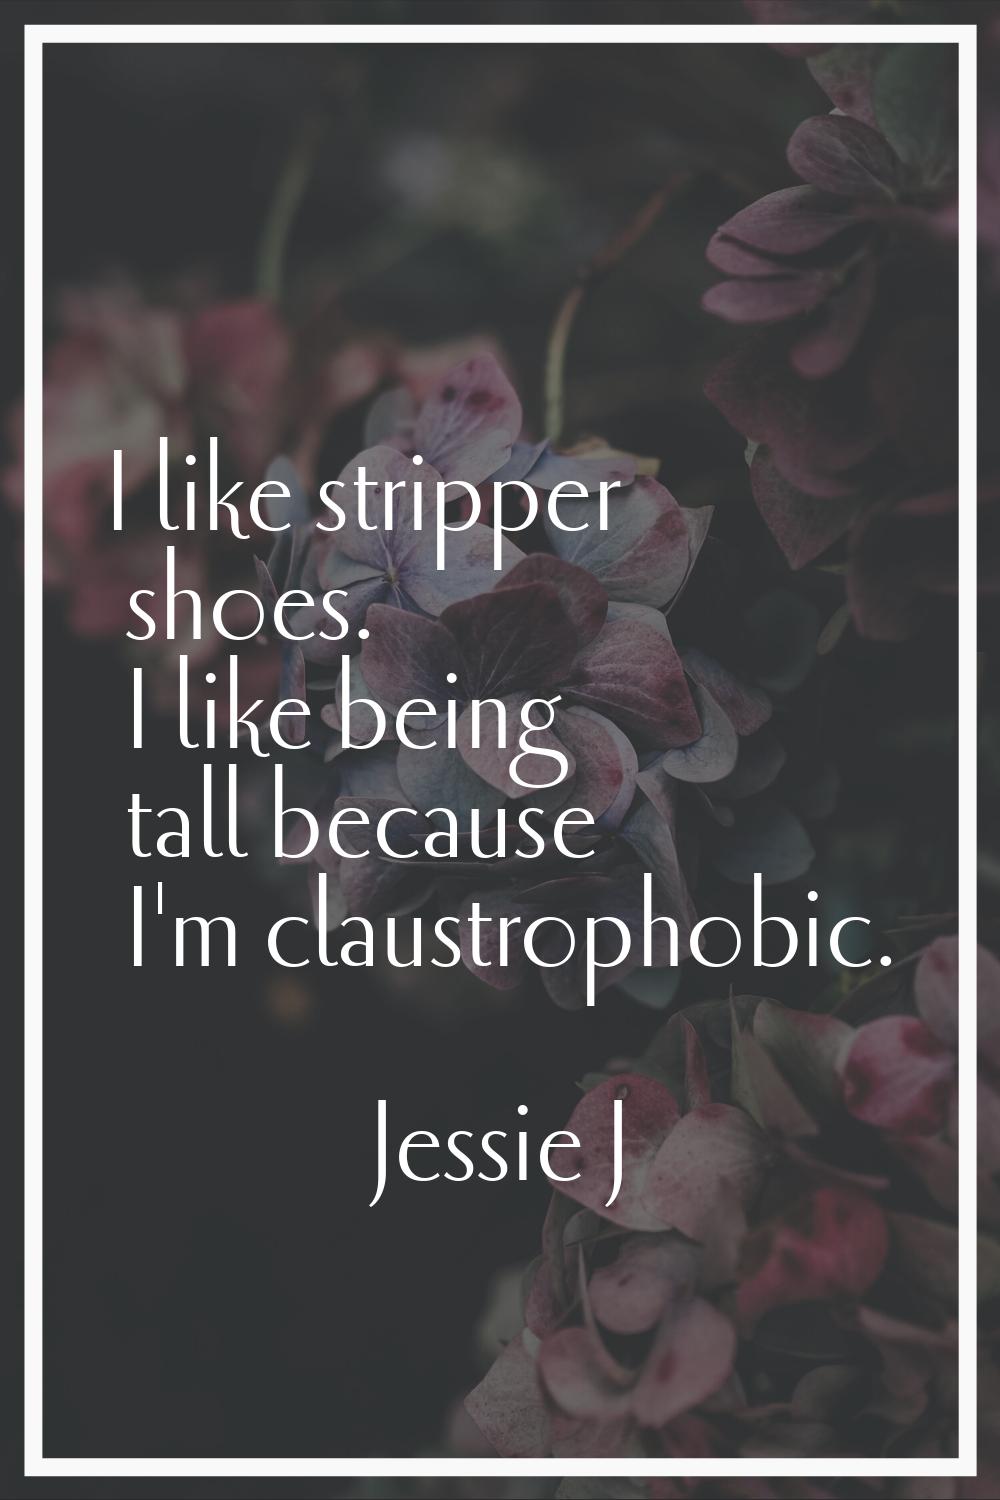 I like stripper shoes. I like being tall because I'm claustrophobic.